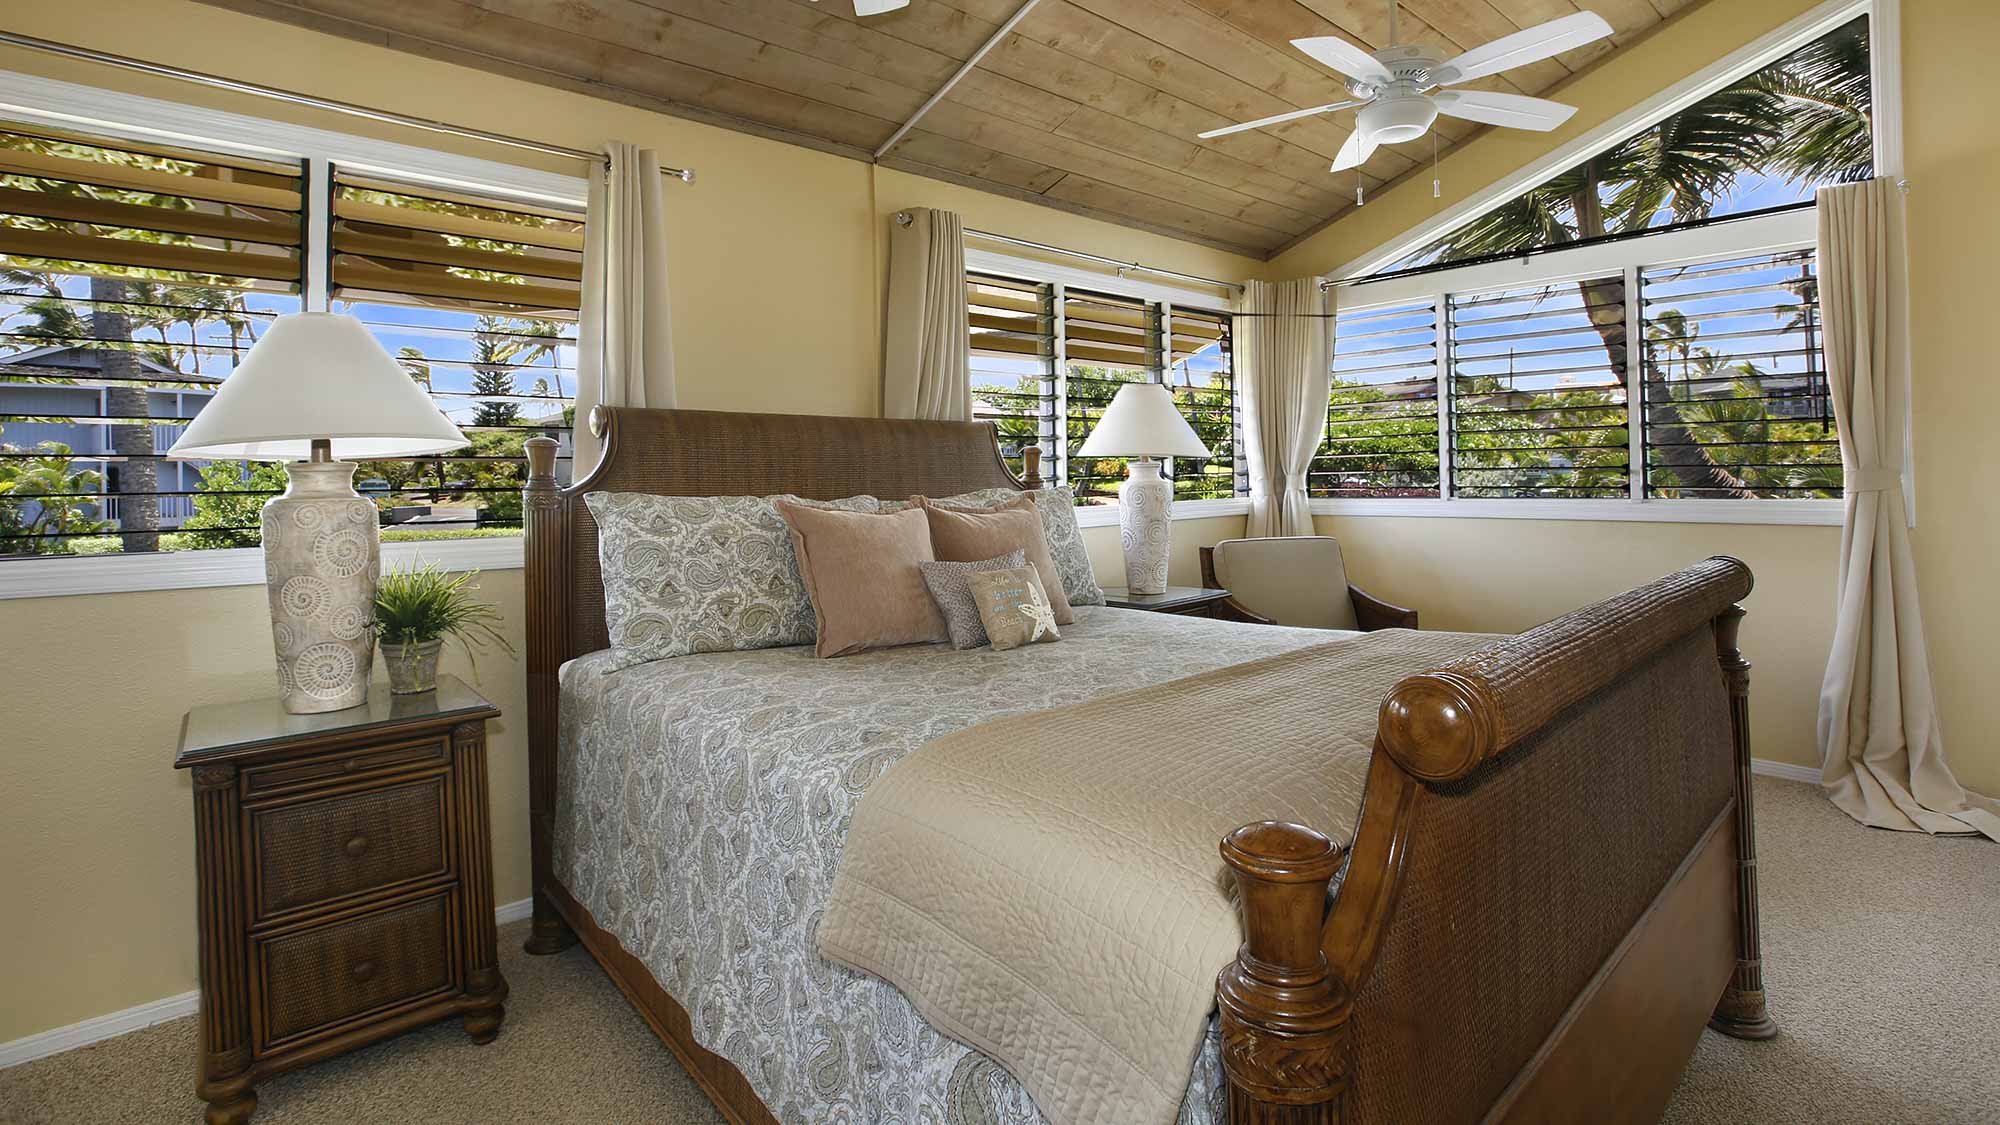 Makahuena at Poipu #1301 - Master Bedroom Suite - Parrish Kauai